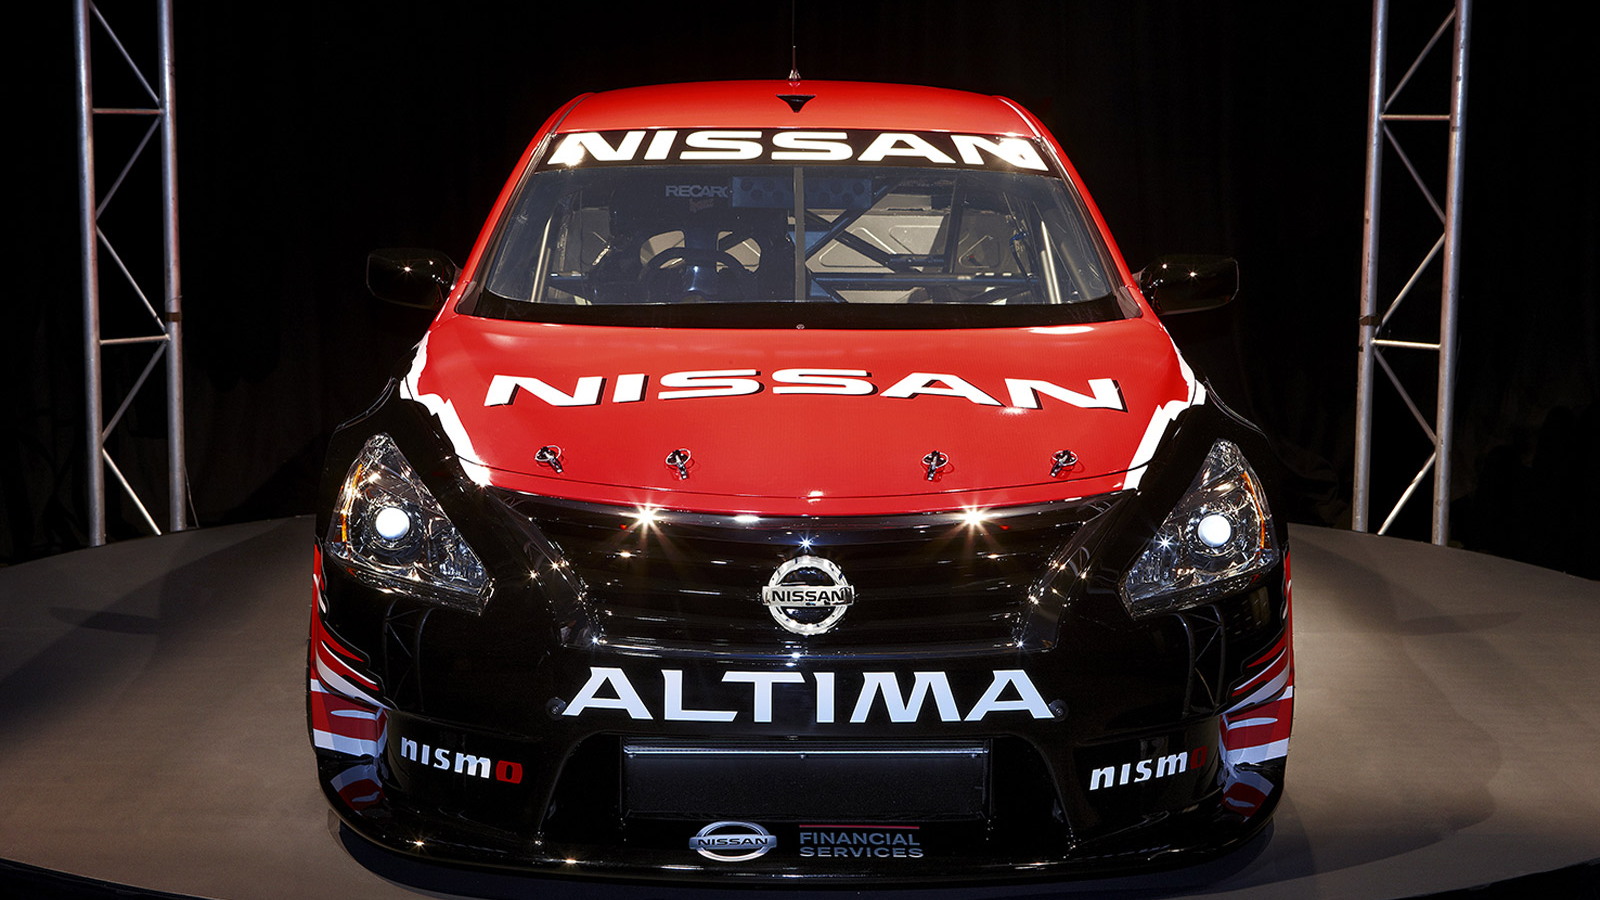 2013 Nissan Altima V8 Supercars race car 